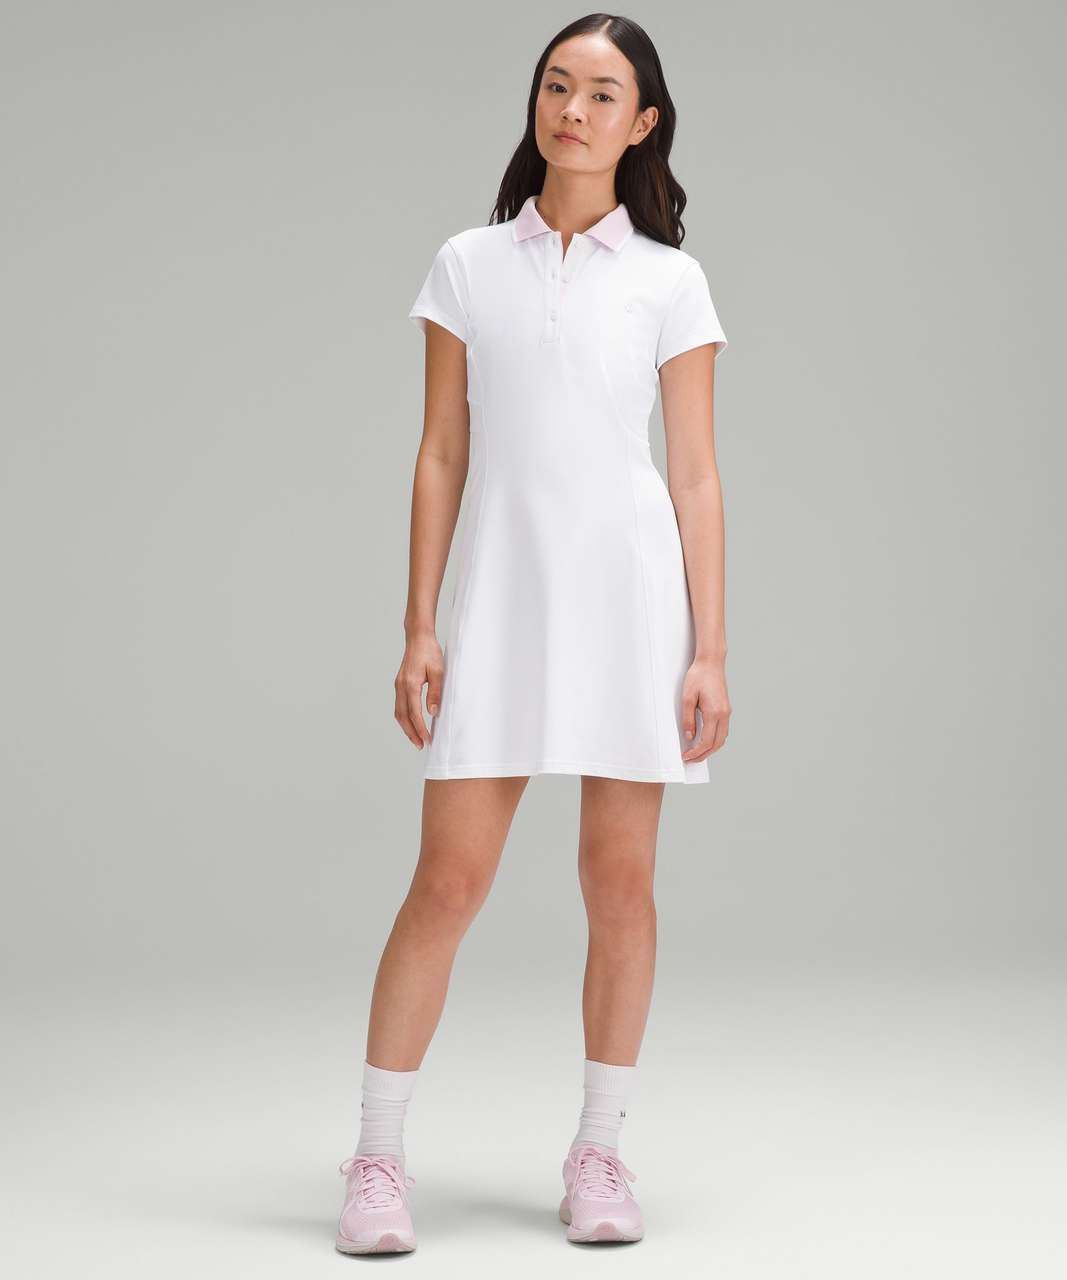 Lululemon Short-Sleeve Polo Dress - White / Meadowsweet Pink